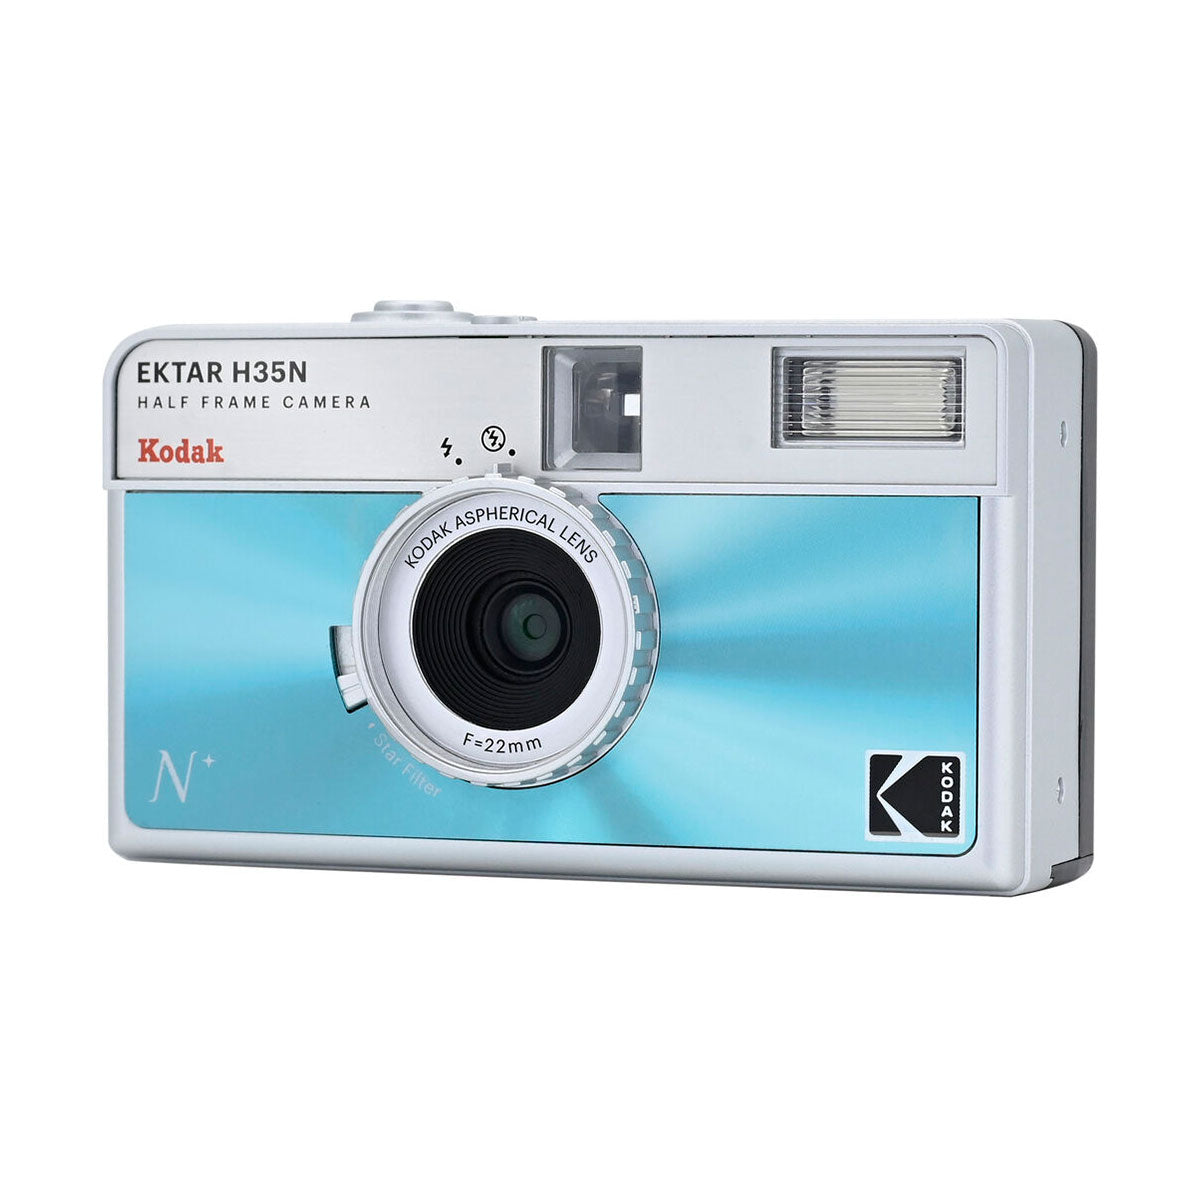 Kodak H35N 1/2 Frame Film Camera - Blue